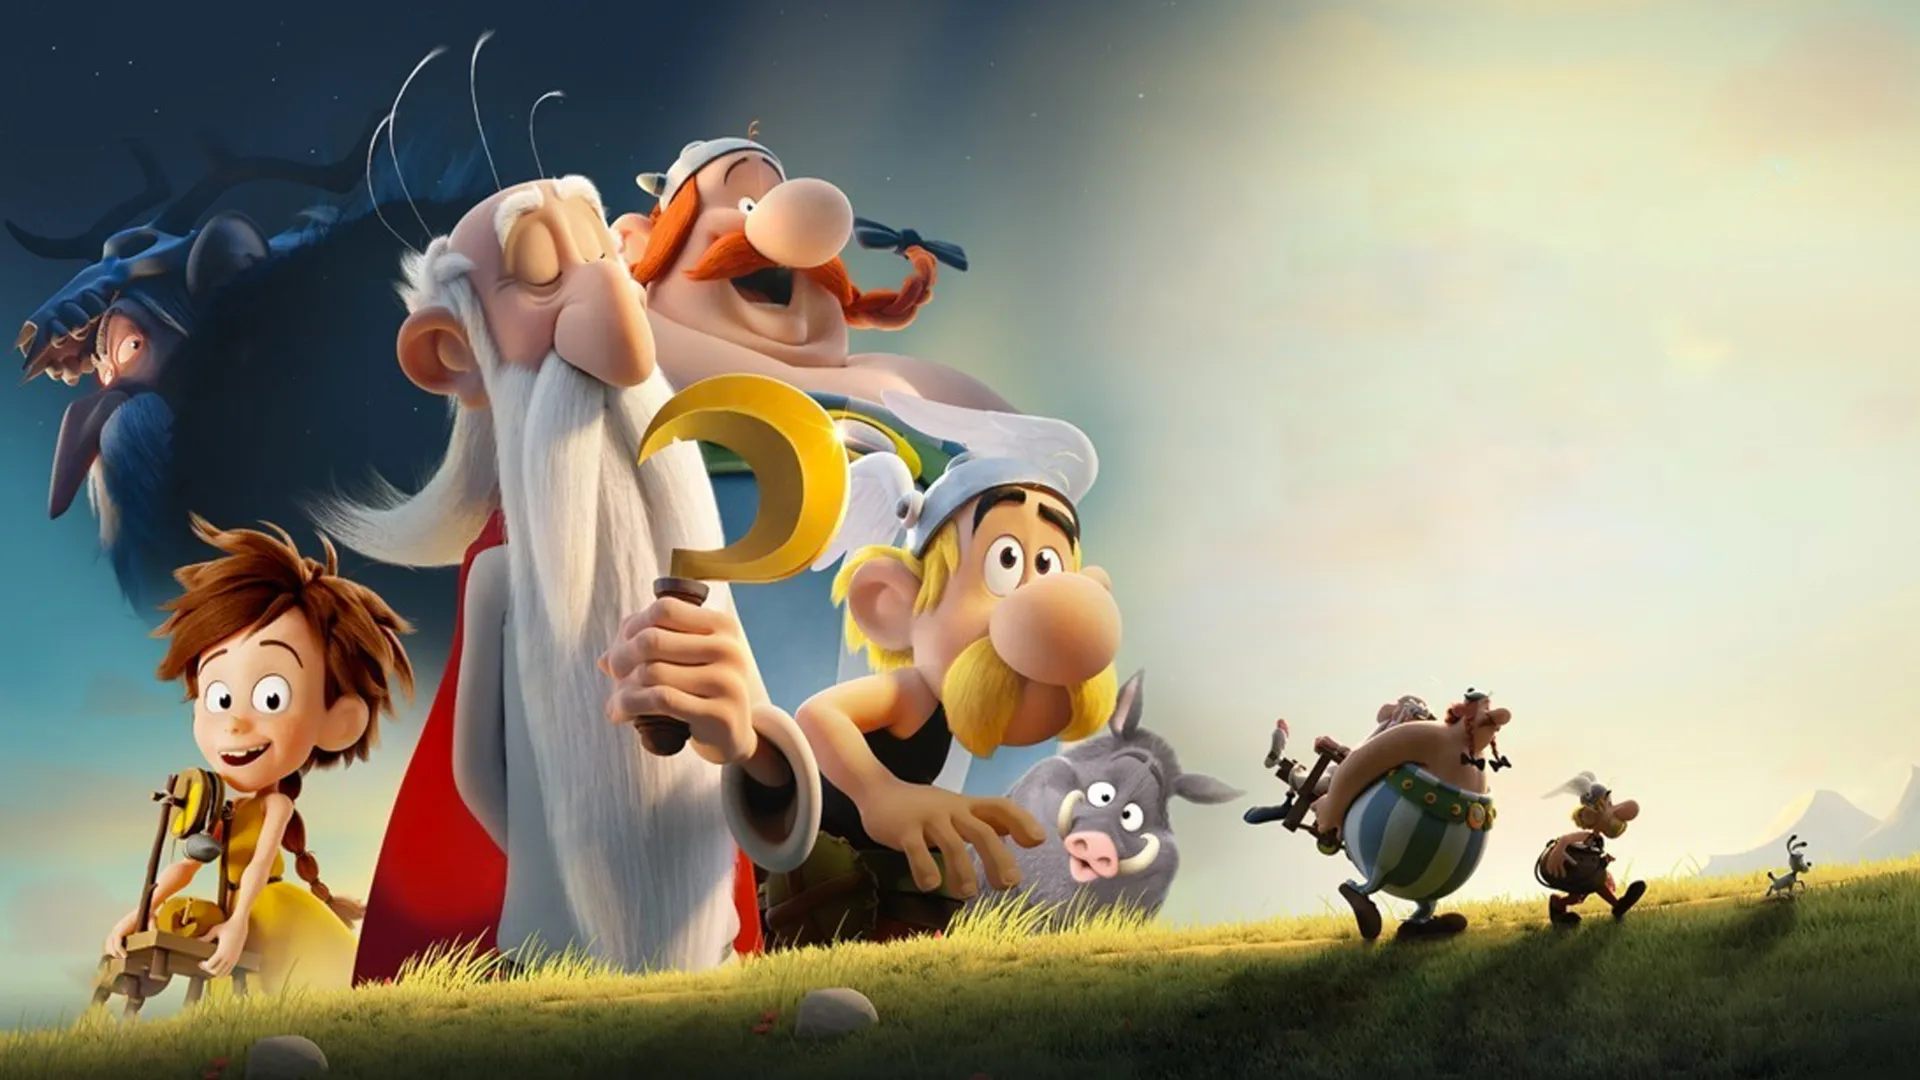 Asterix: Bí Kíp Luyện Thần Dược